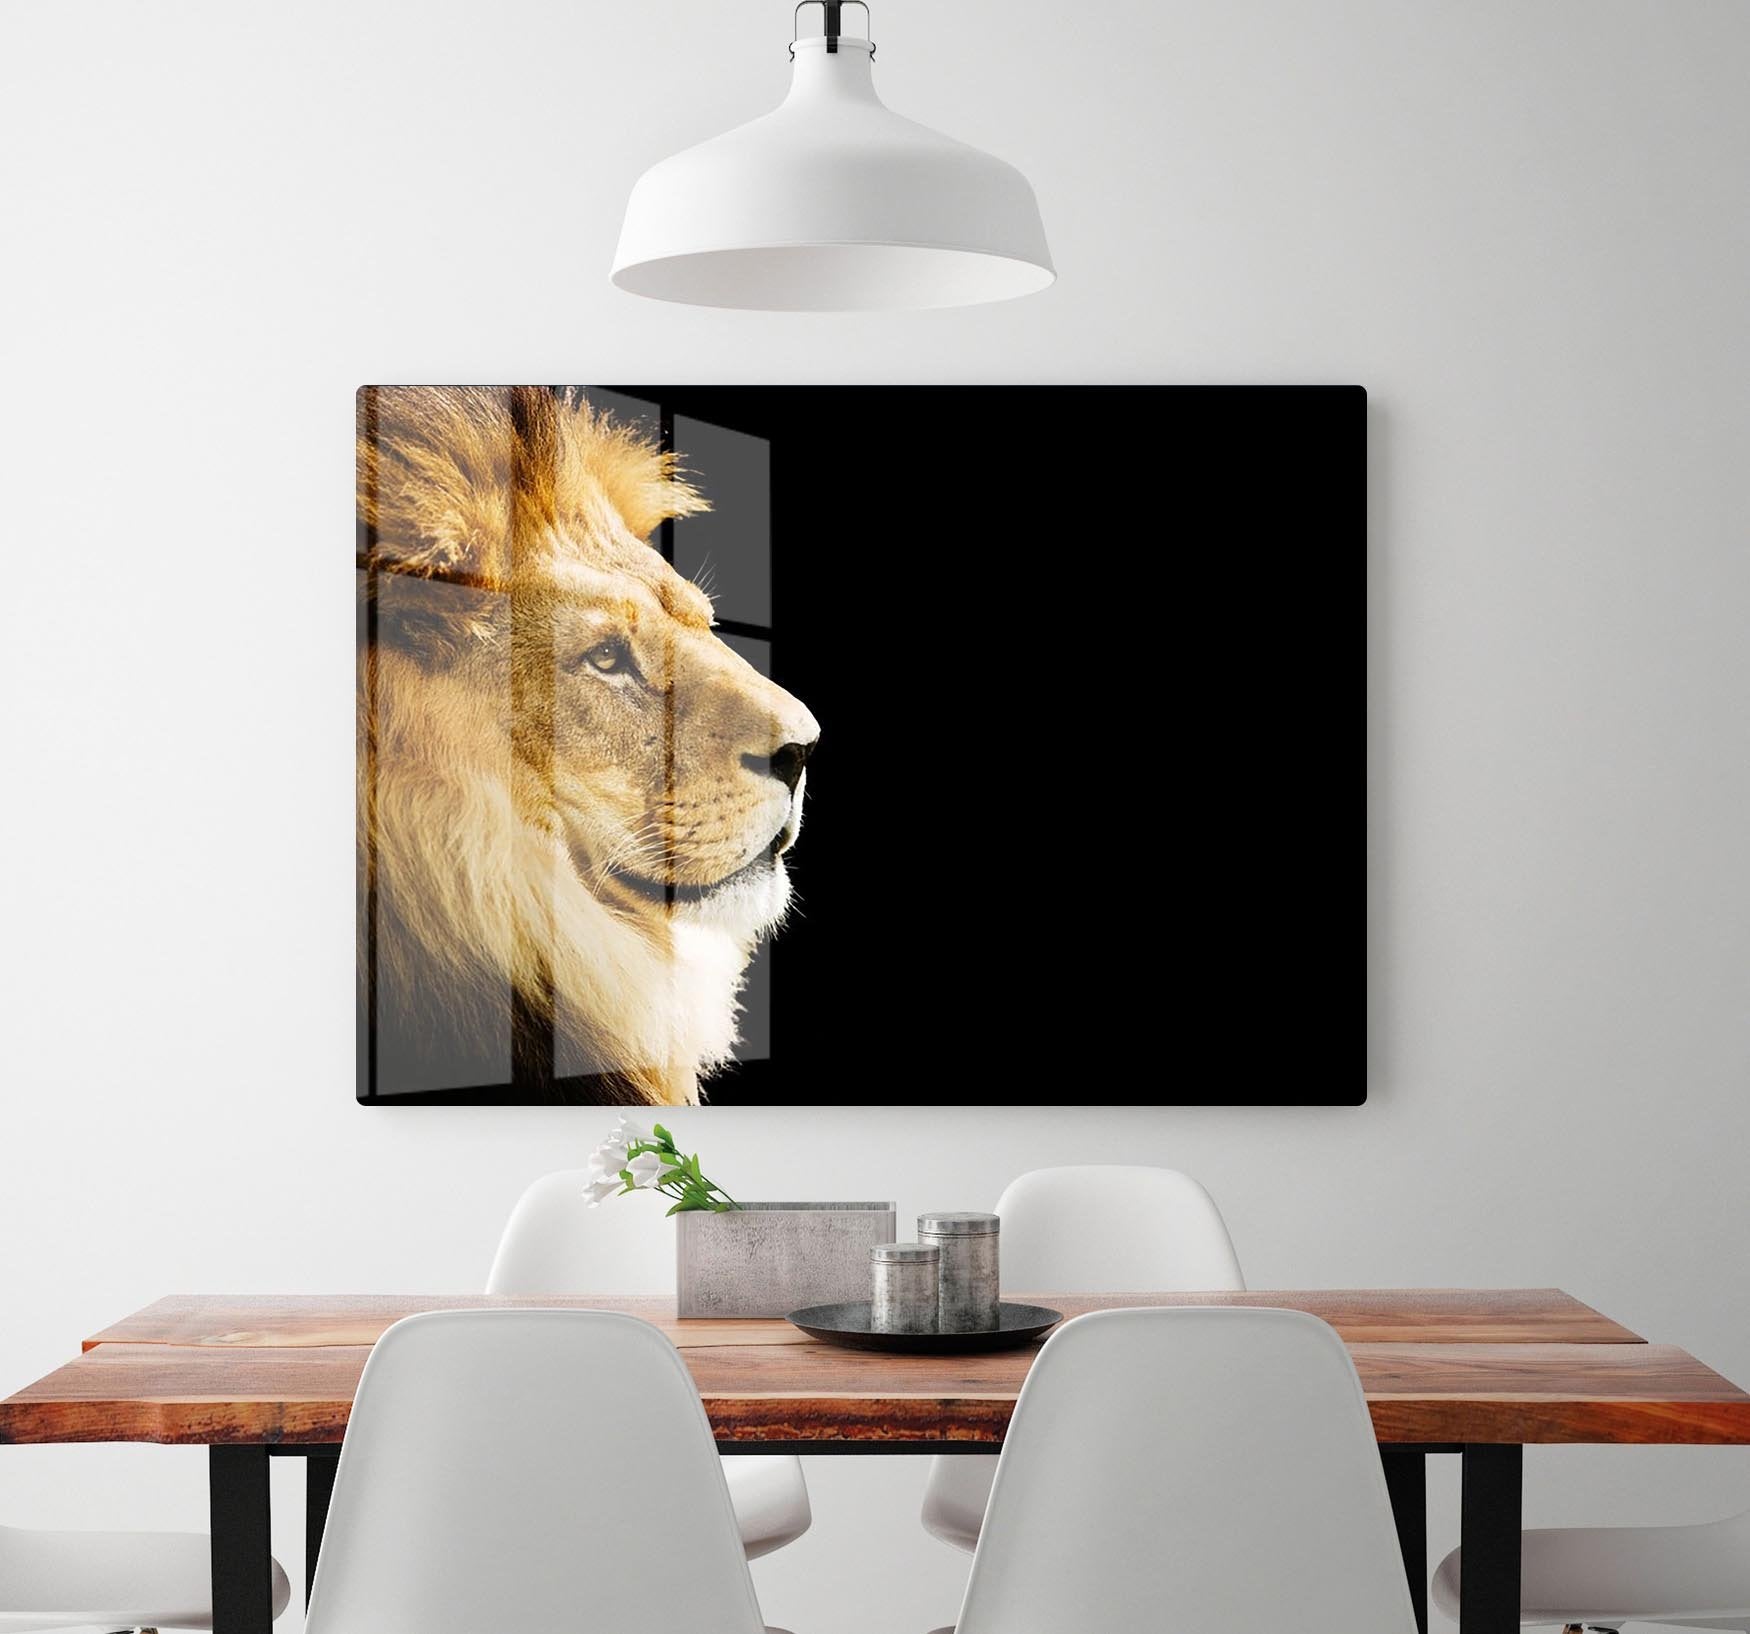 The king of all animals portrait HD Metal Print - Canvas Art Rocks - 2